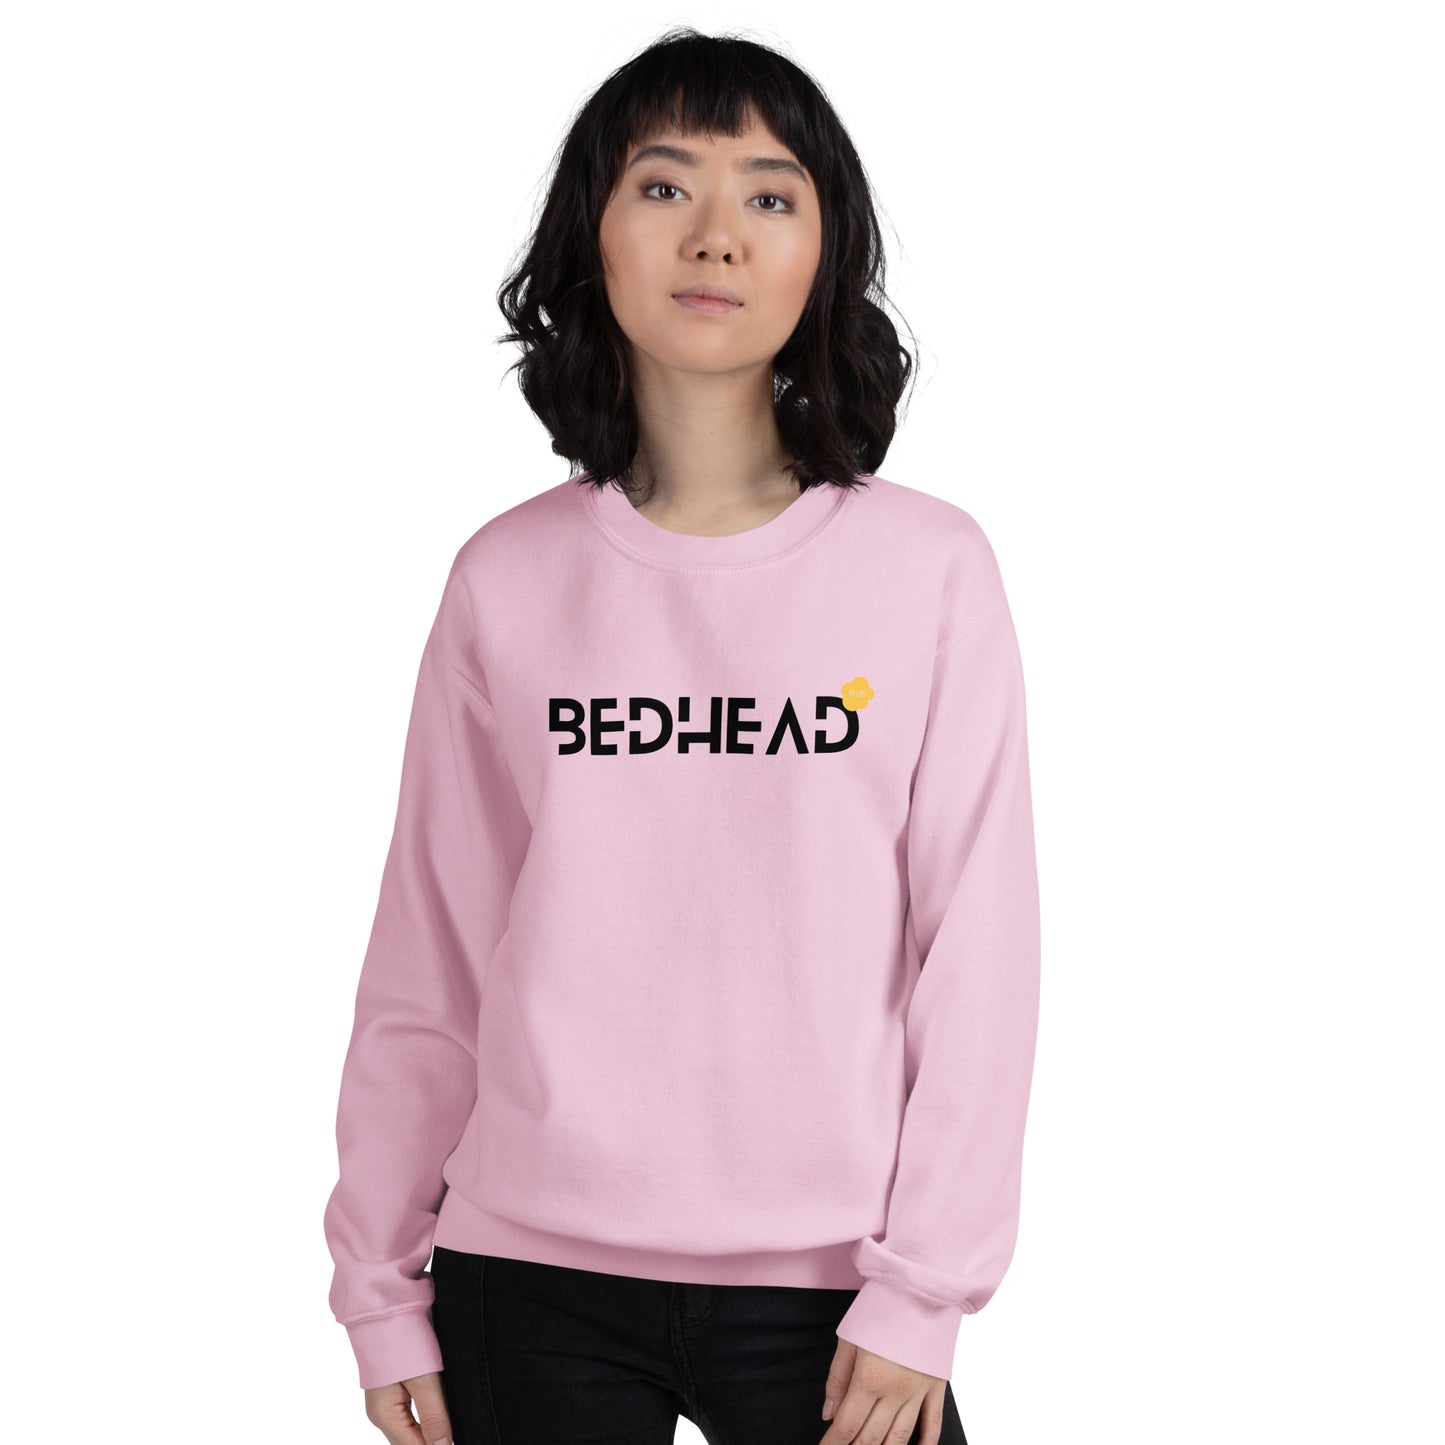 BEDHEAD Unisex Sweatshirt